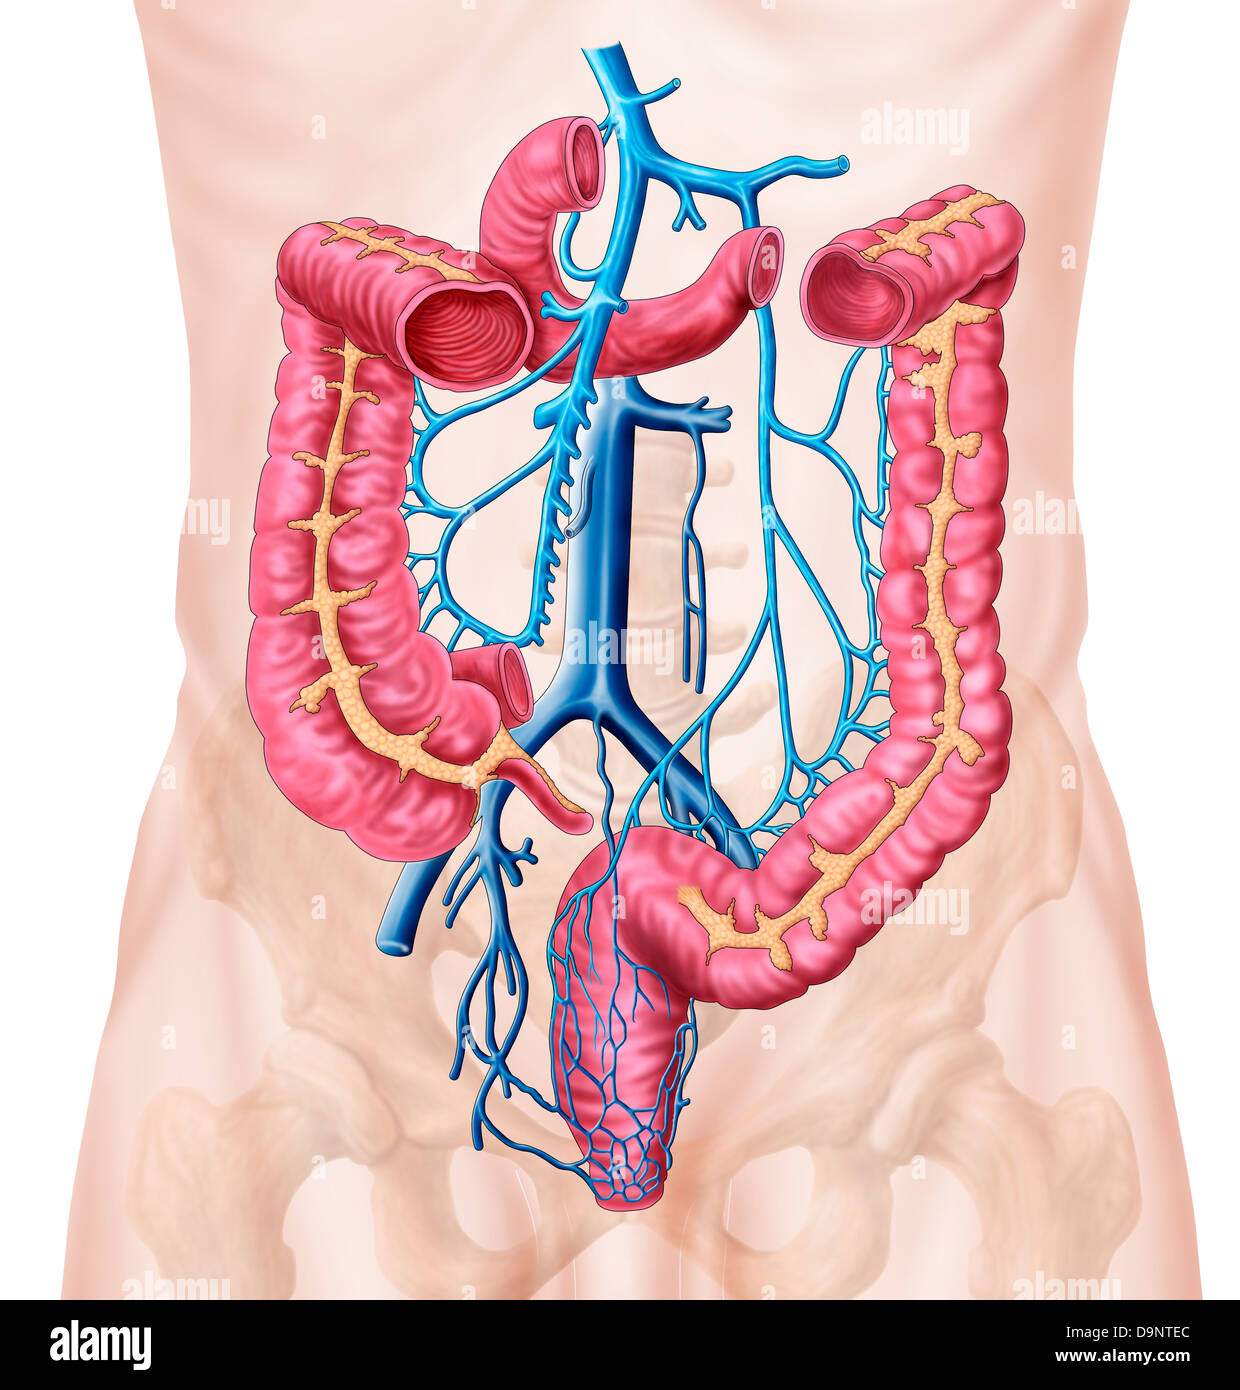 Anatomy of human abdominal vein system. Stock Photo